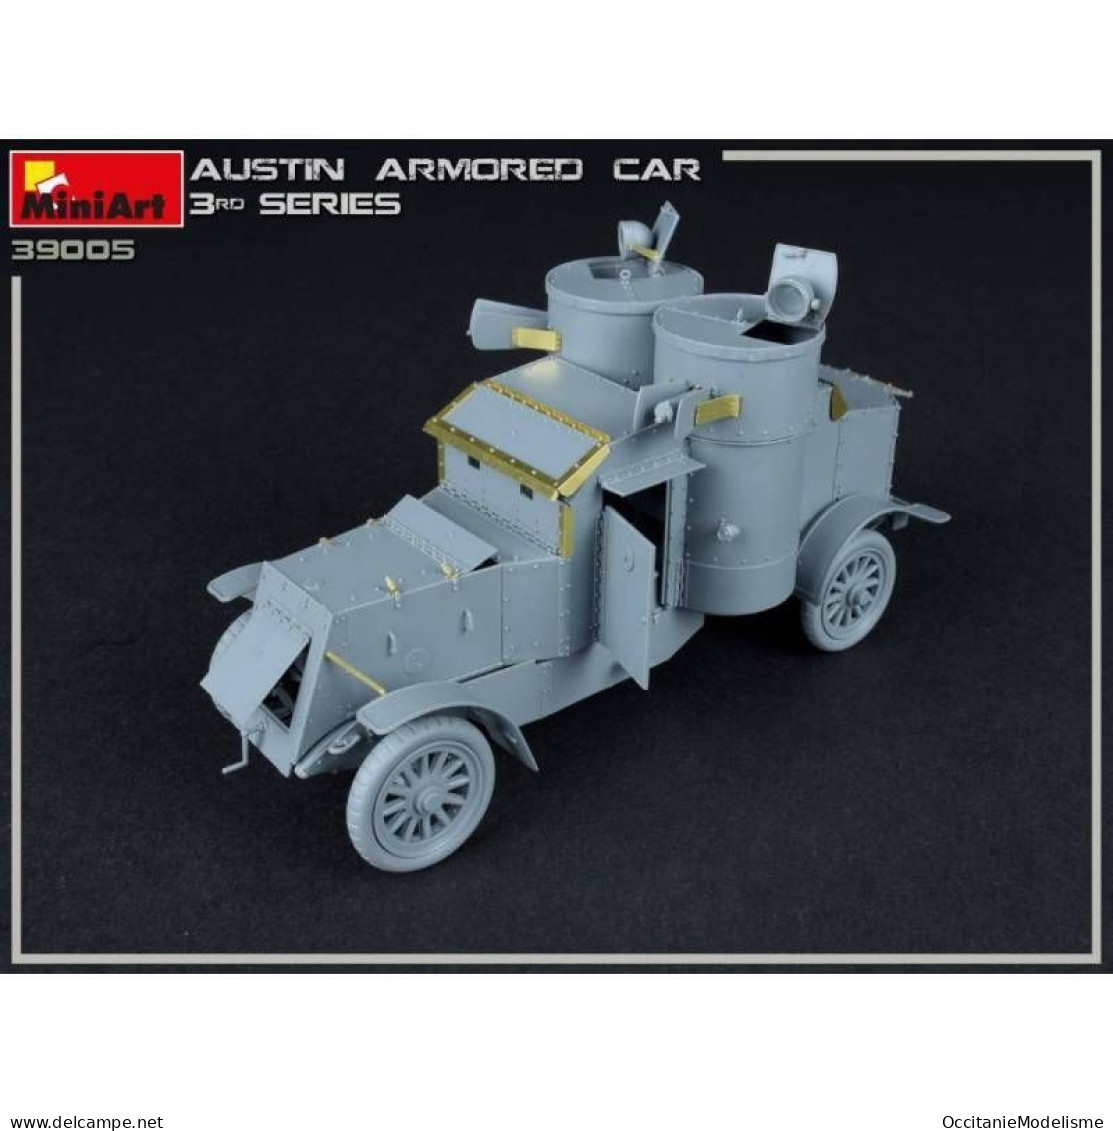 Miniart - AUSTIN ARMOURED CAR 3rd Series Maquette Kit Plastique Réf. 39005 Neuf NBO 1/35 - Vehículos Militares